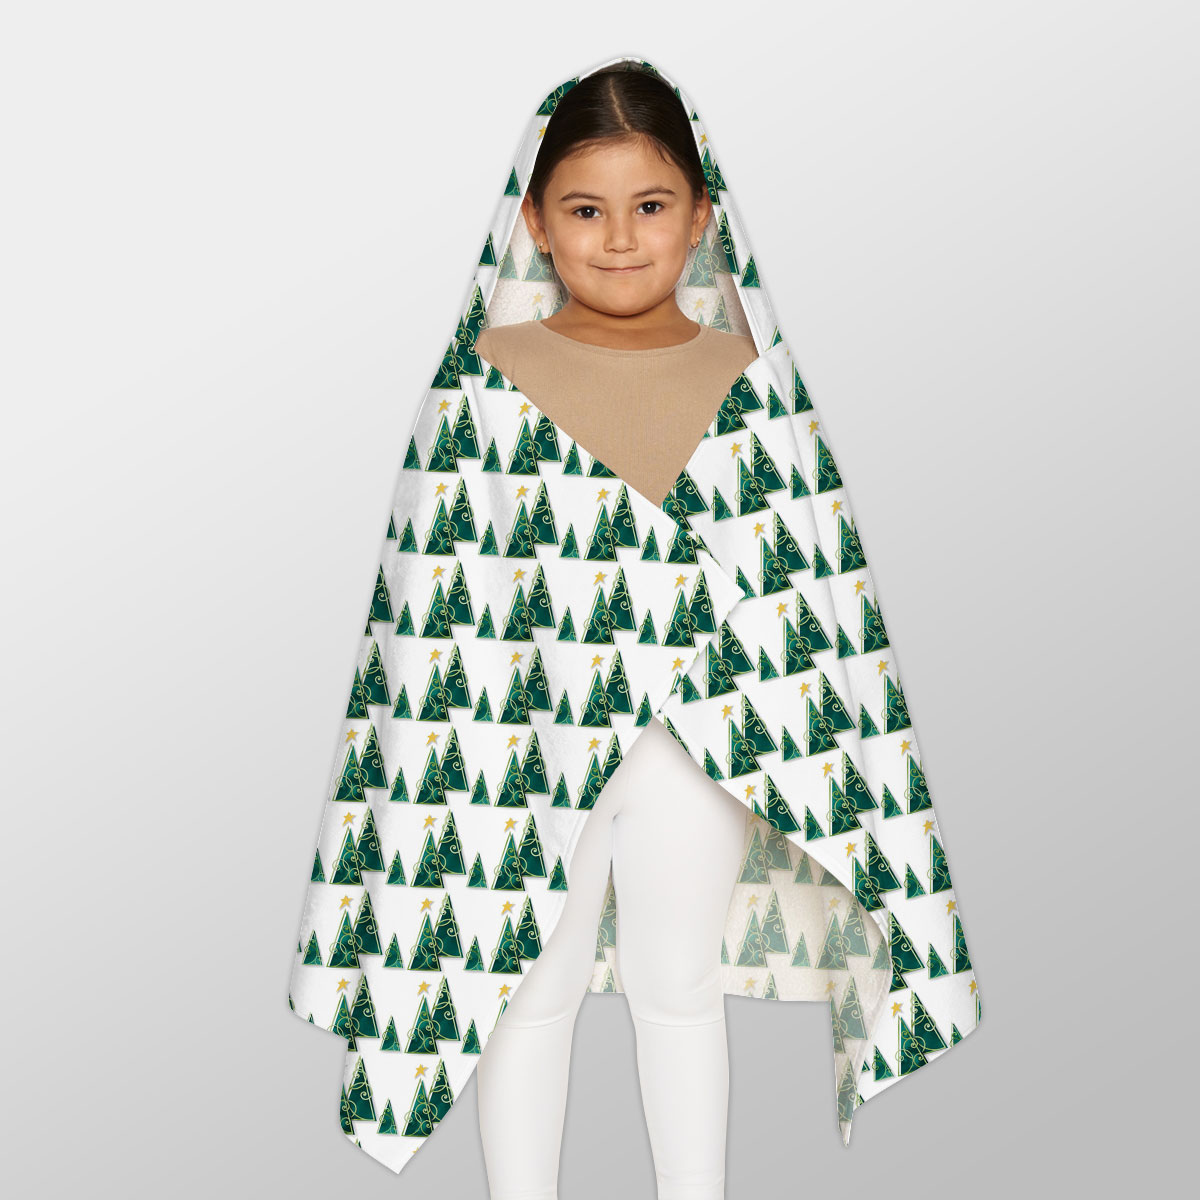 Christmas Tree, Pine Tree, Christmas Tree Star Topper Youth Hooded Towel